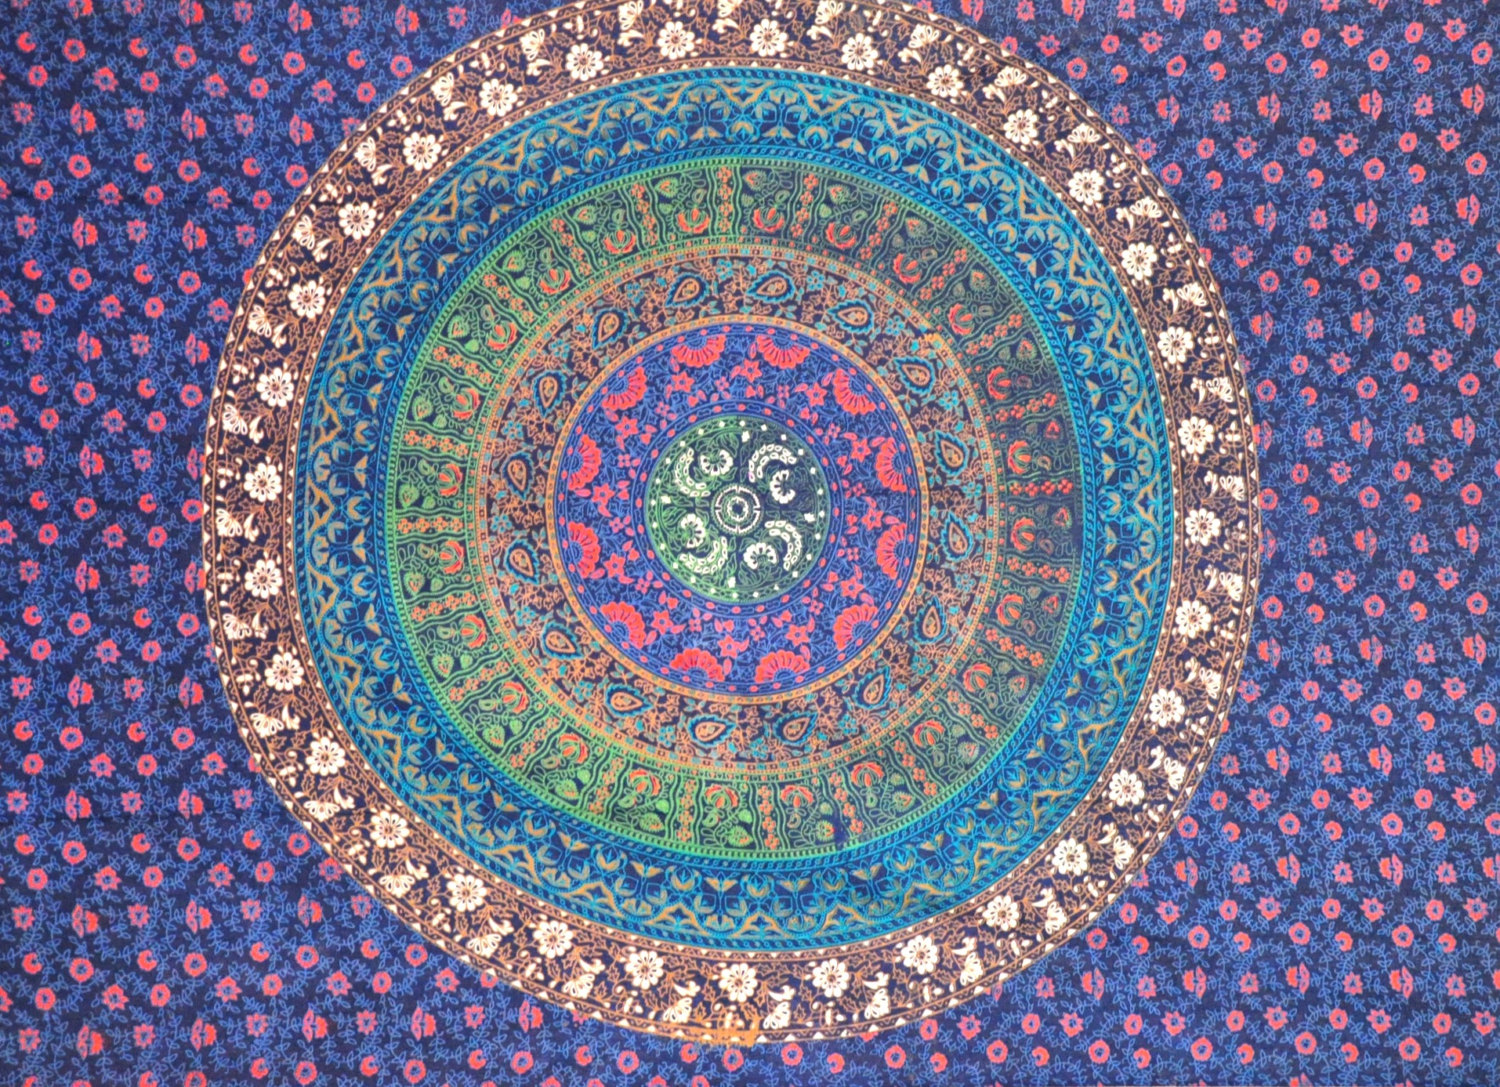 Hippie Tapestries Wall Hanging Mandala By Lavishjaipur